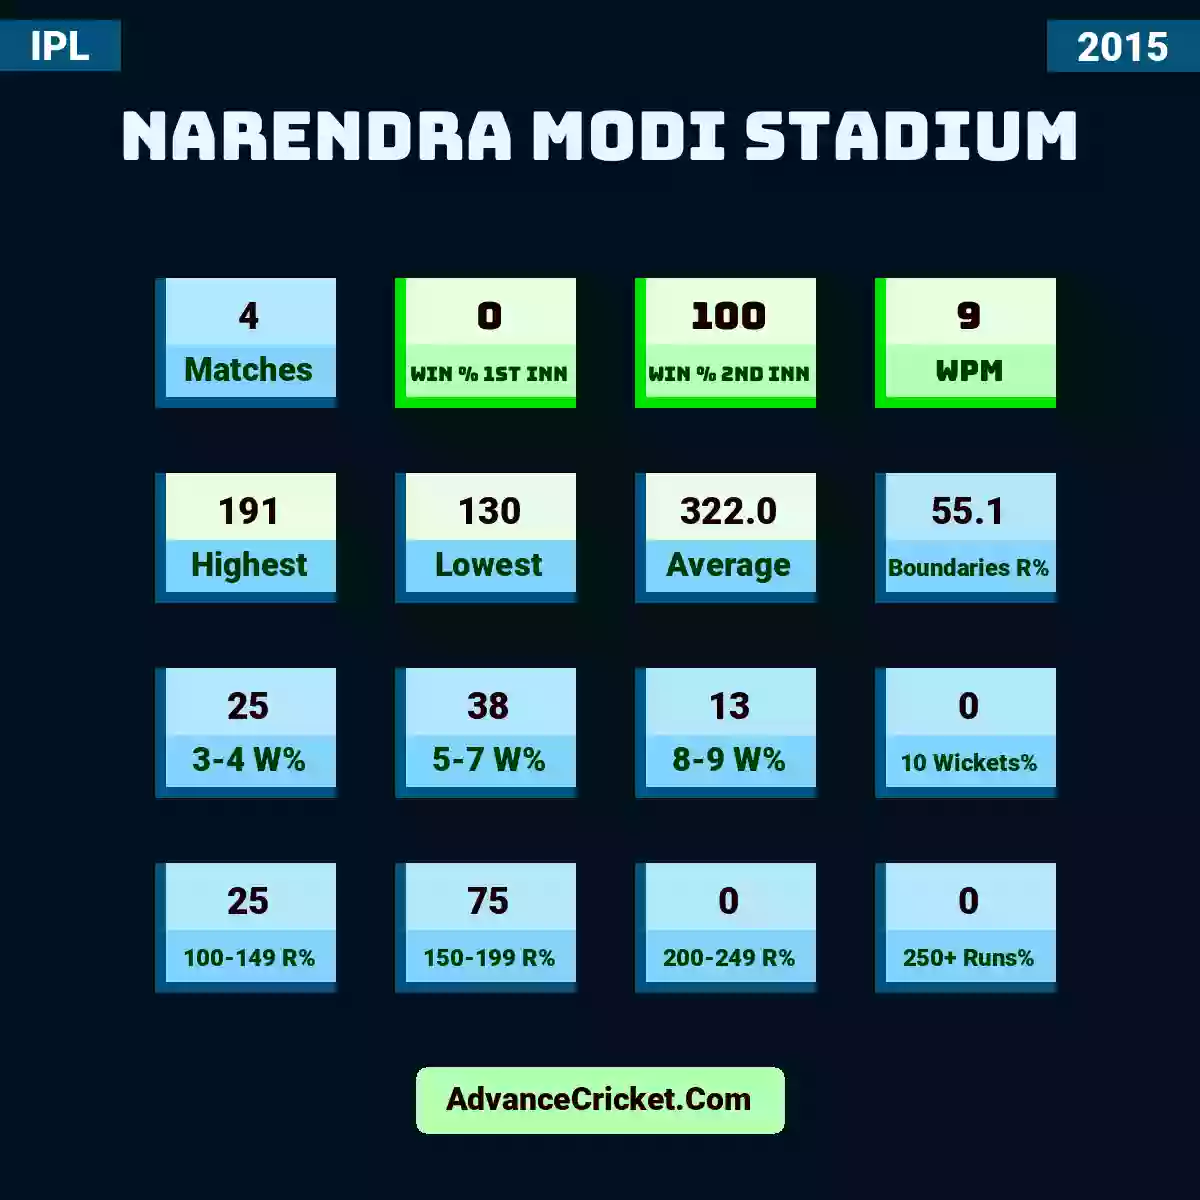 Image showing Narendra Modi Stadium with Matches: 4, Win % 1st Inn: 0, Win % 2nd Inn: 100, WPM: 9, Highest: 191, Lowest: 130, Average: 322.0, Boundaries R%: 55.1, 3-4 W%: 25, 5-7 W%: 38, 8-9 W%: 13, 10 Wickets%: 0, 100-149 R%: 25, 150-199 R%: 75, 200-249 R%: 0, 250+ Runs%: 0.